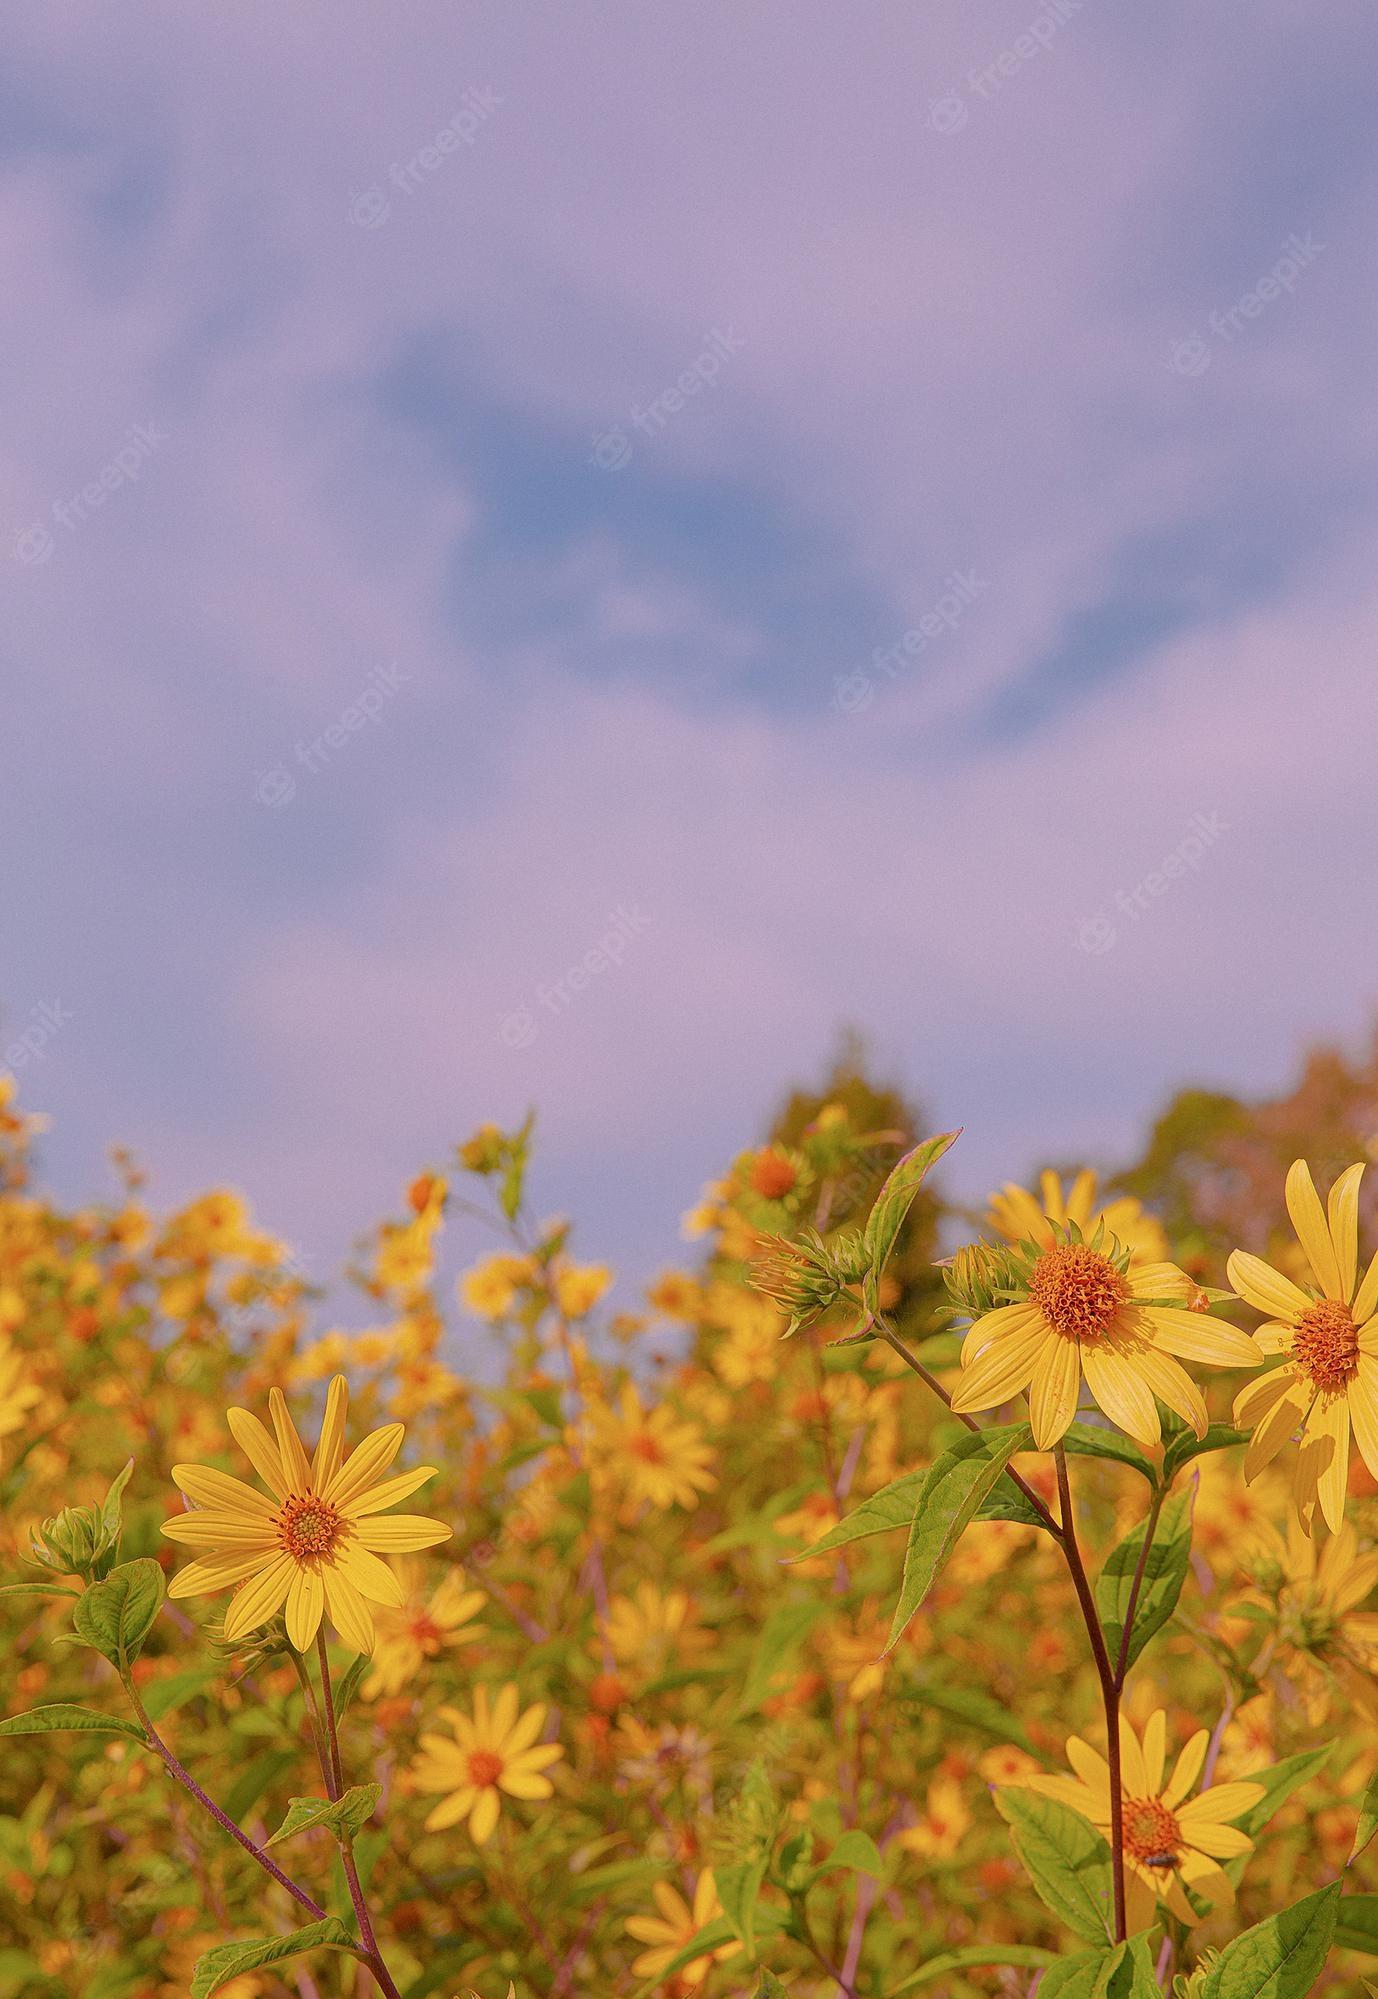 Premium Photo Eco nature plant lover background yellow flower